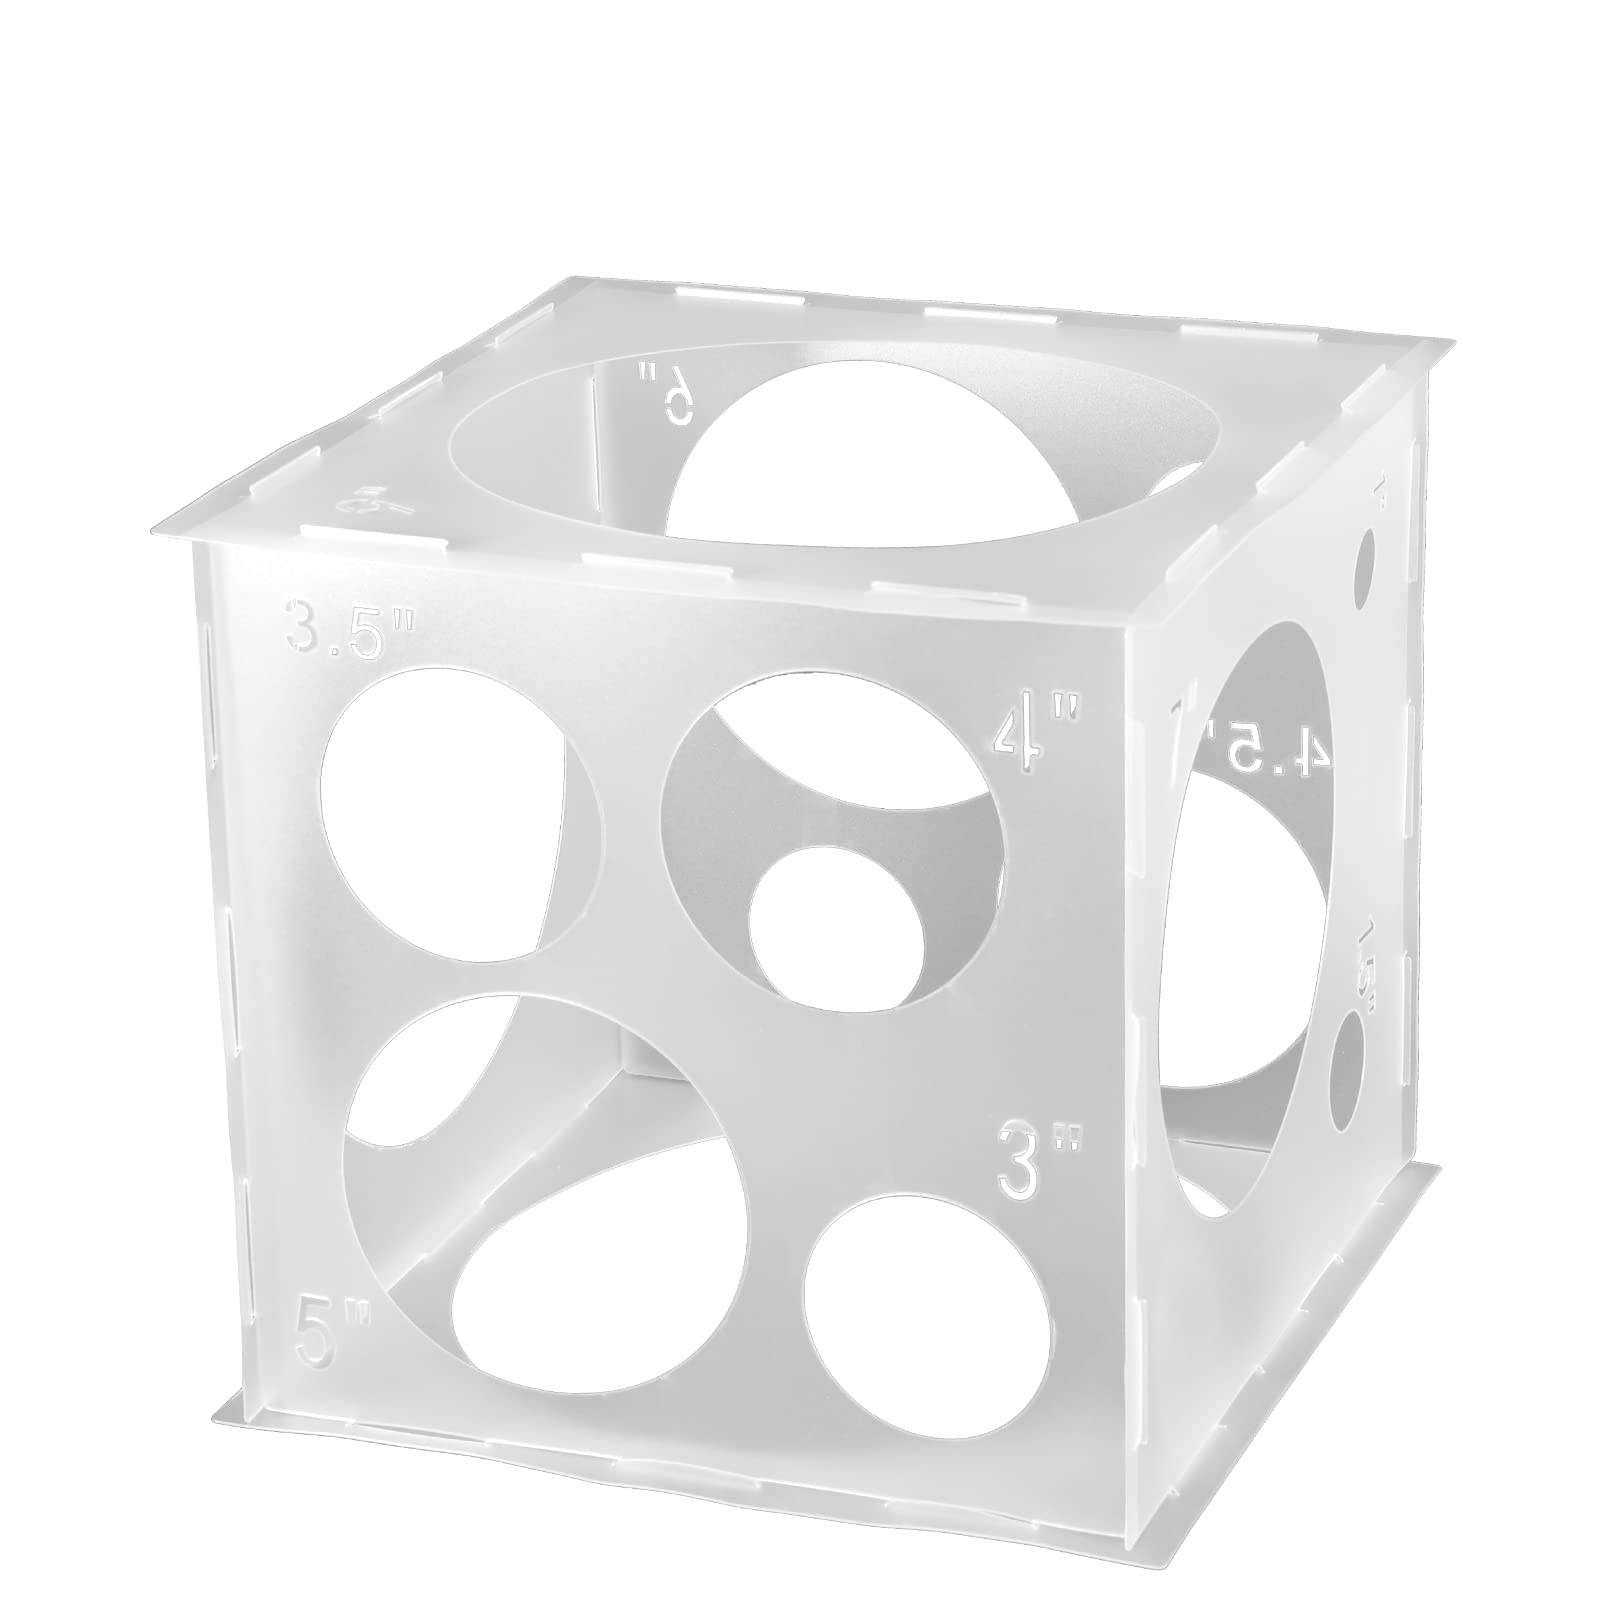  Auihiay Plastic Balloon Sizer Box Cube, Pink